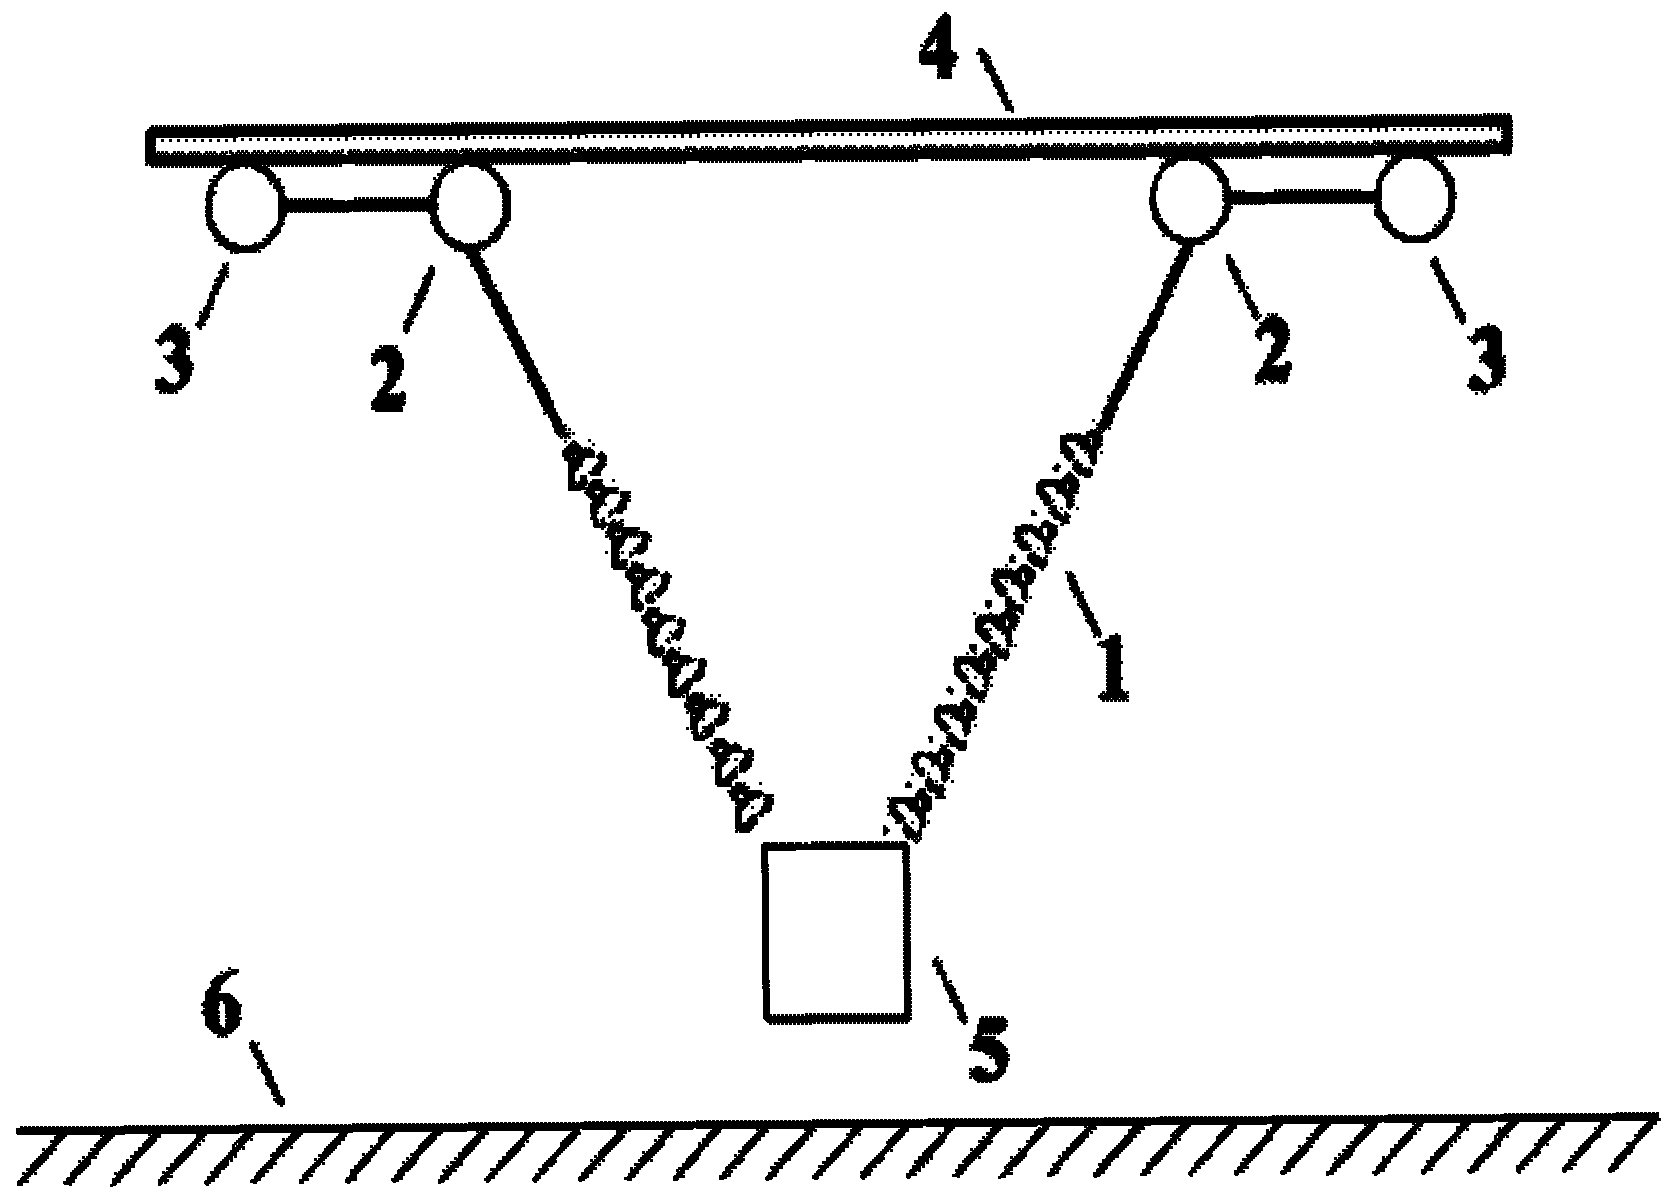 V-shaped insulator string suspension device